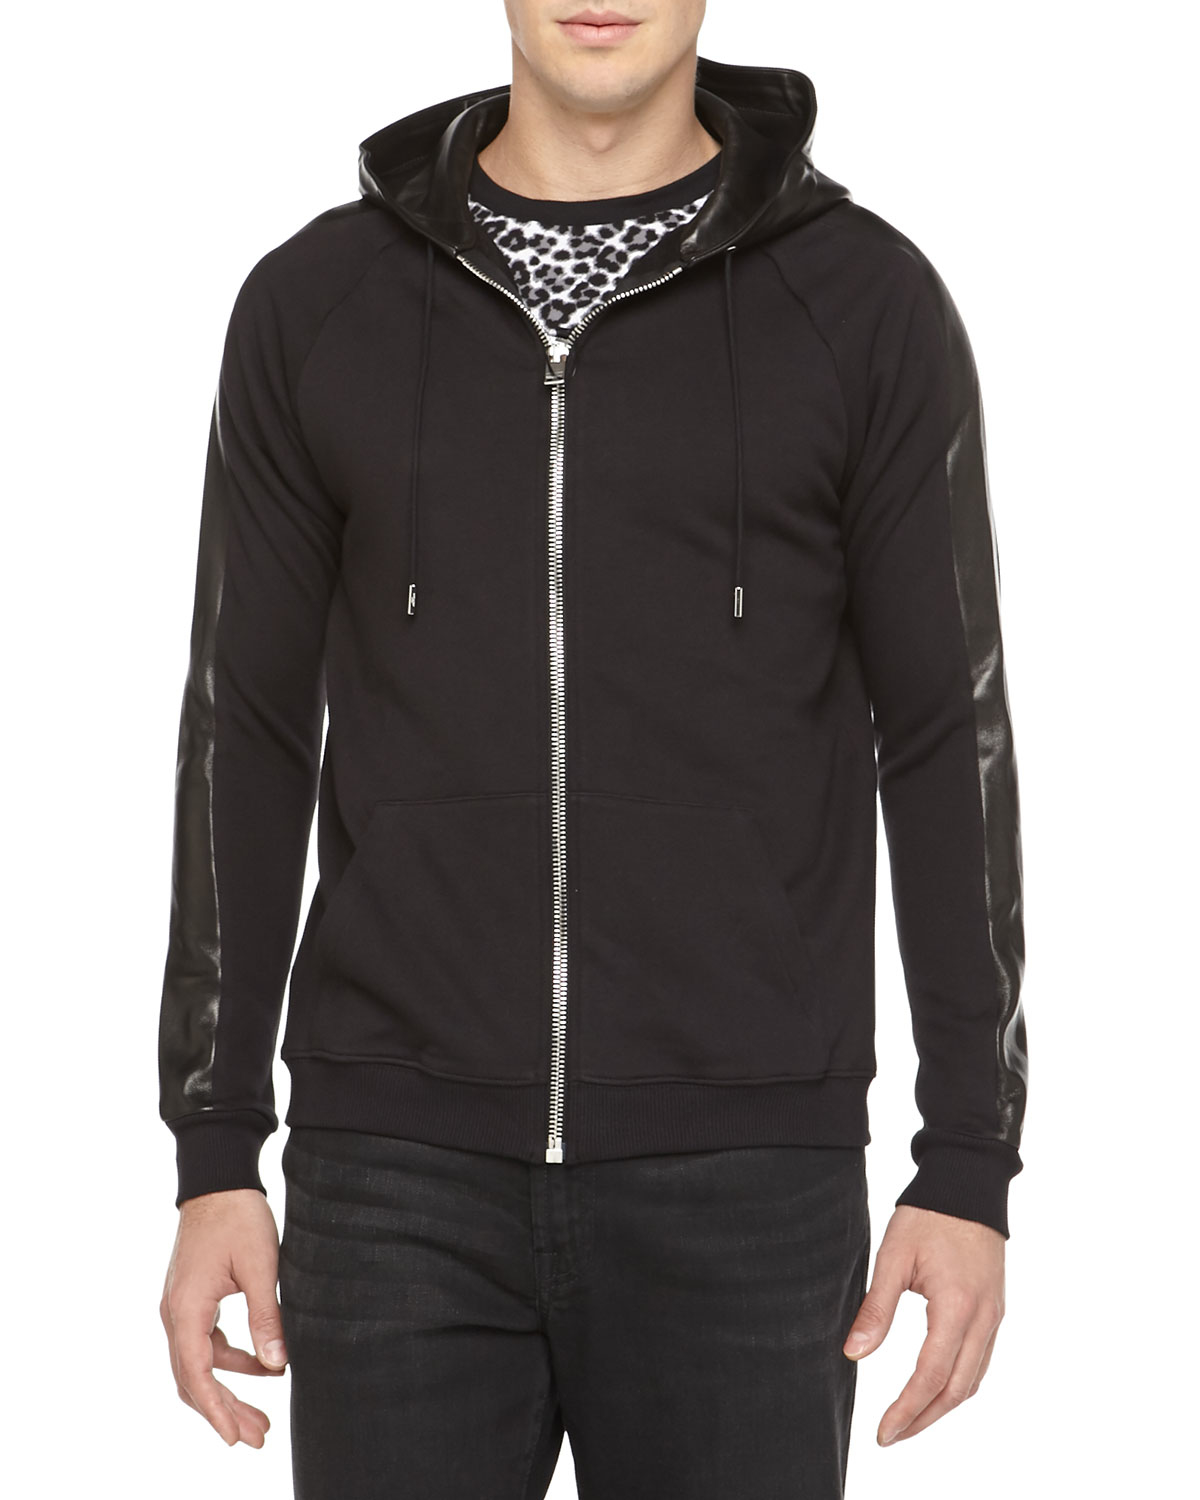 Lyst - Saint Laurent Zip Hoodie With Leather Hood in Black for Men